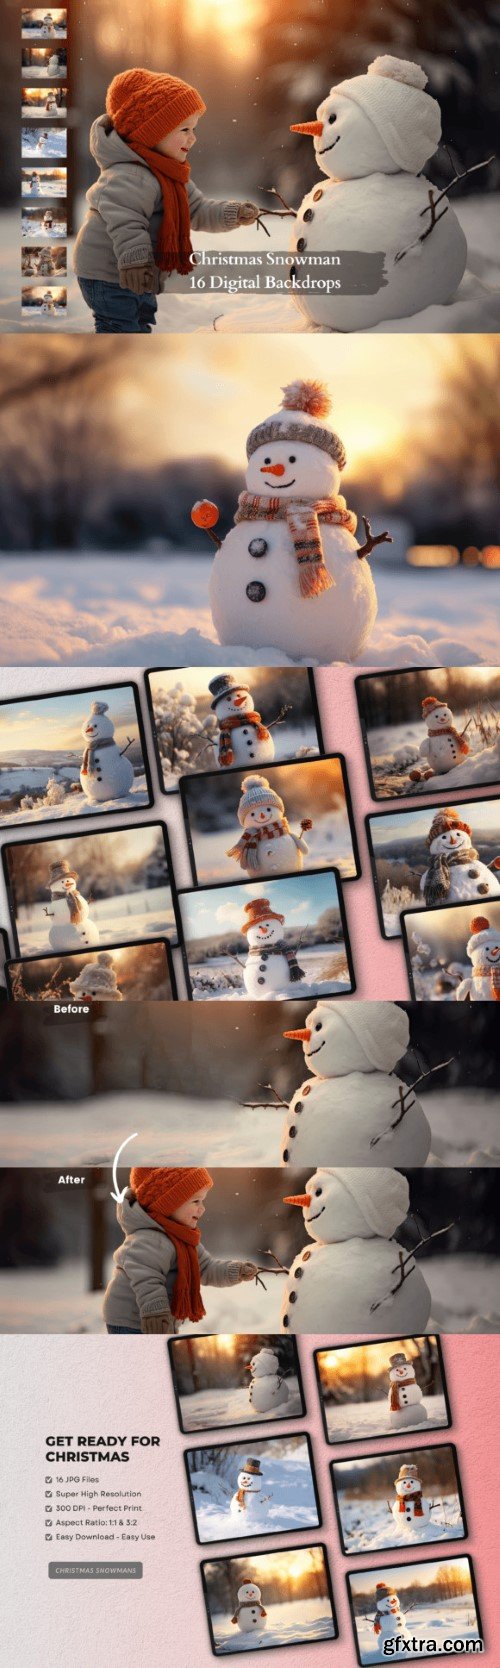 Christmas Snowman | Digital Backgrounds